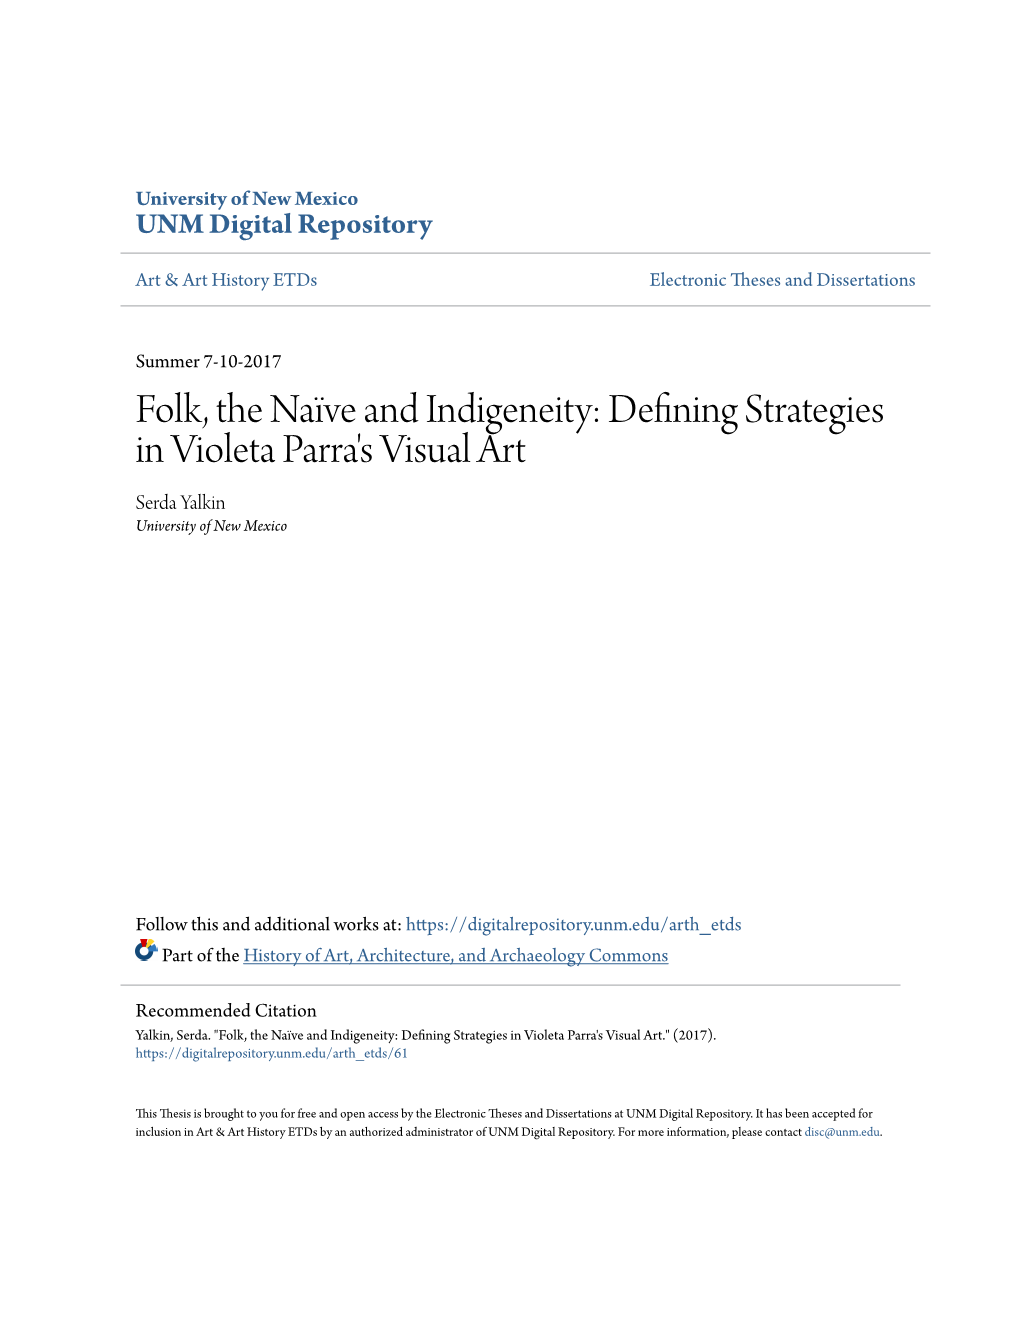 Defining Strategies in Violeta Parra's Visual Art Serda Yalkin University of New Mexico